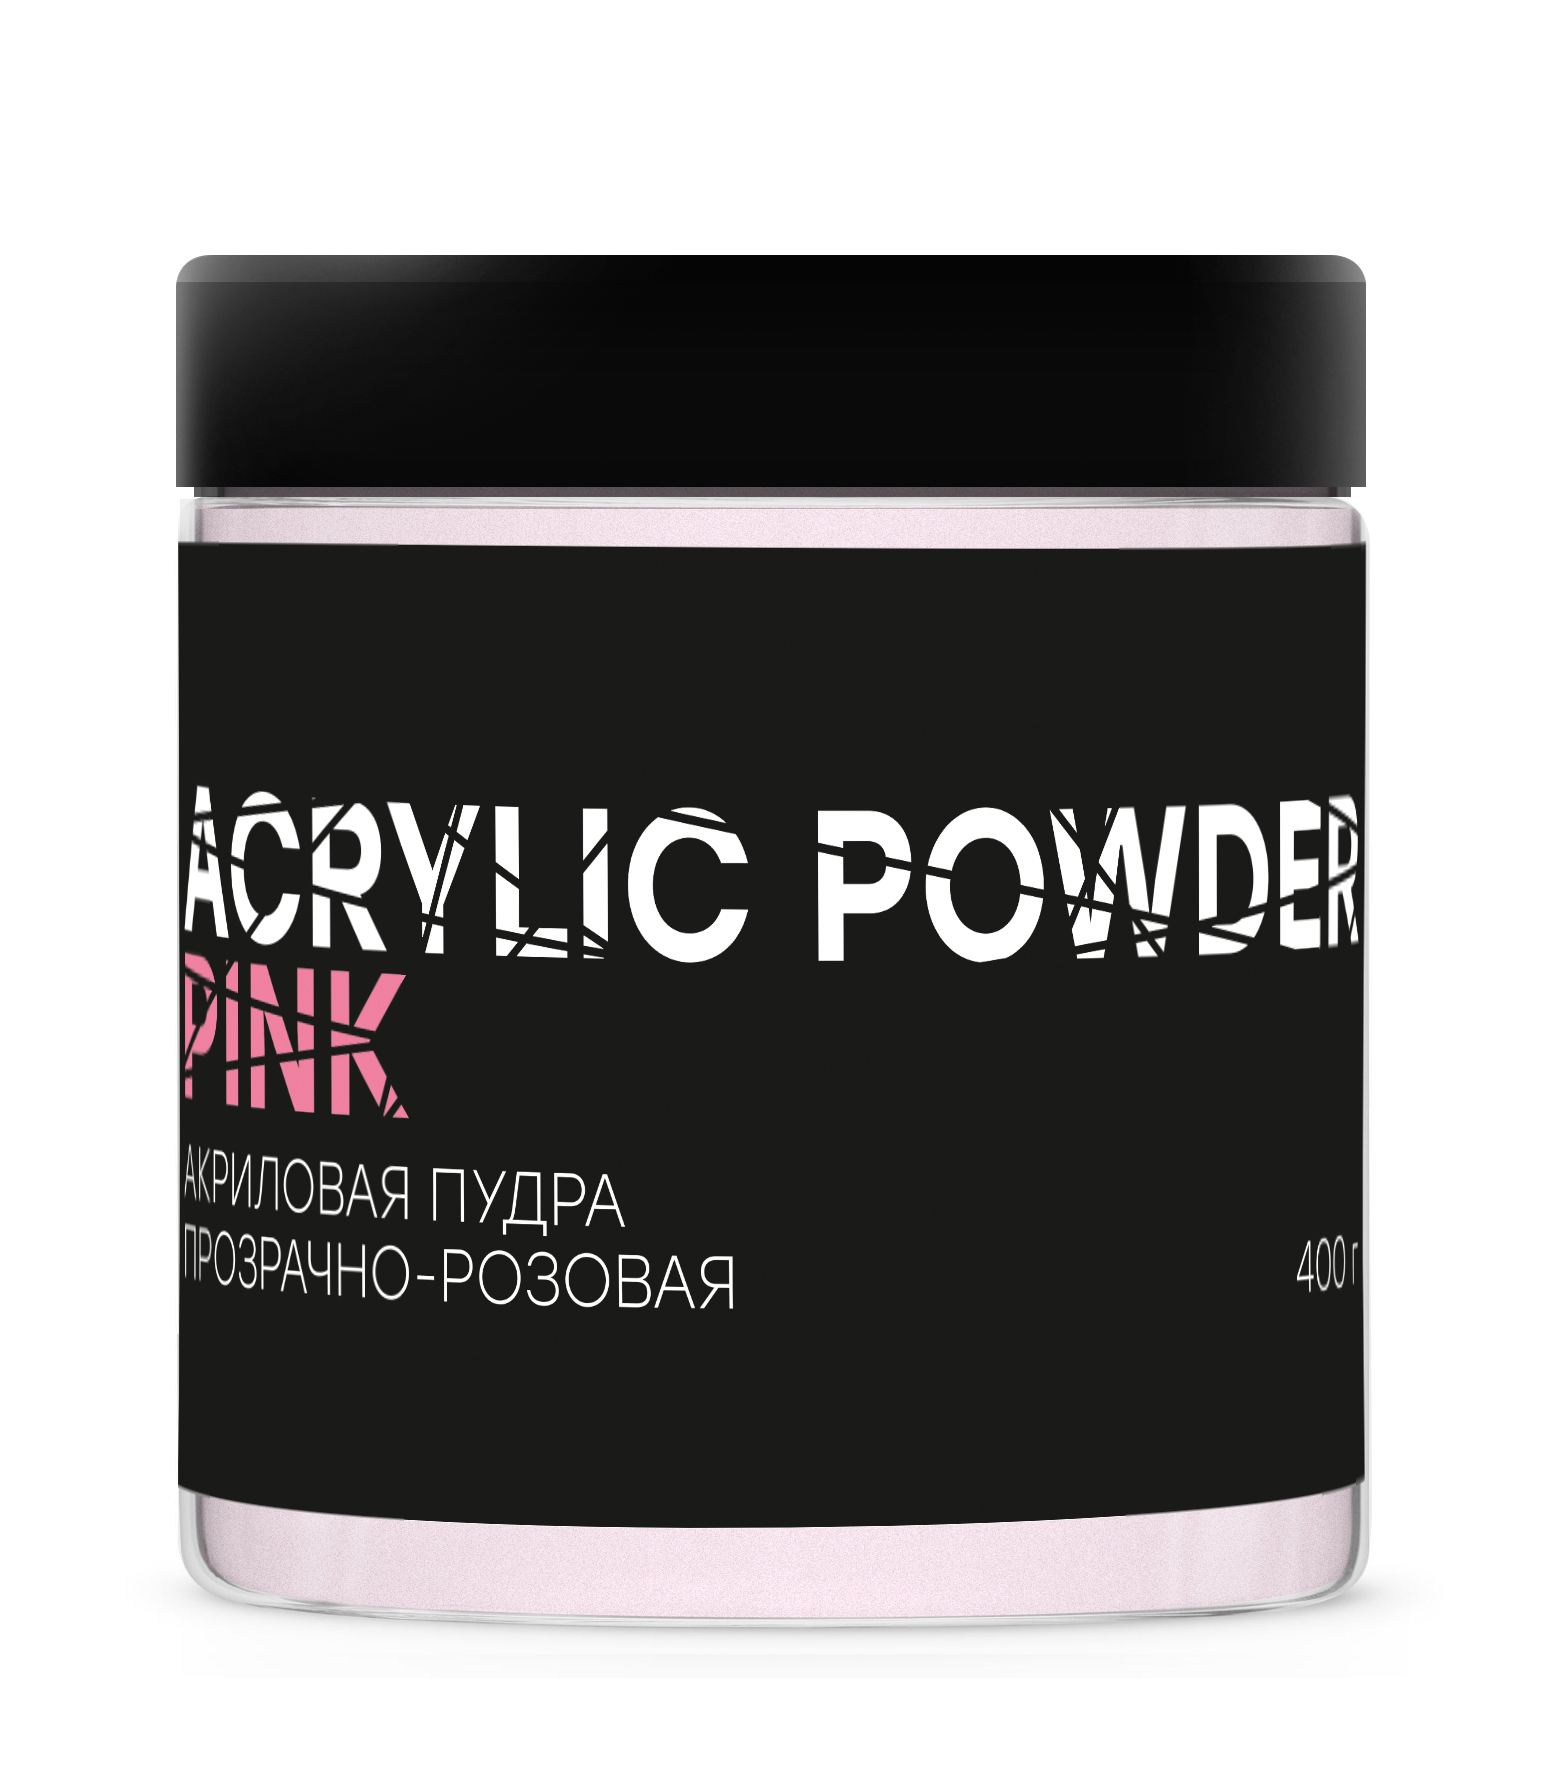 Акриловая пудра InGarden Acrylic Powder Pink прозрачно-розовая, 400 г акриловая пудра elpaza acrylic powder white 50gm